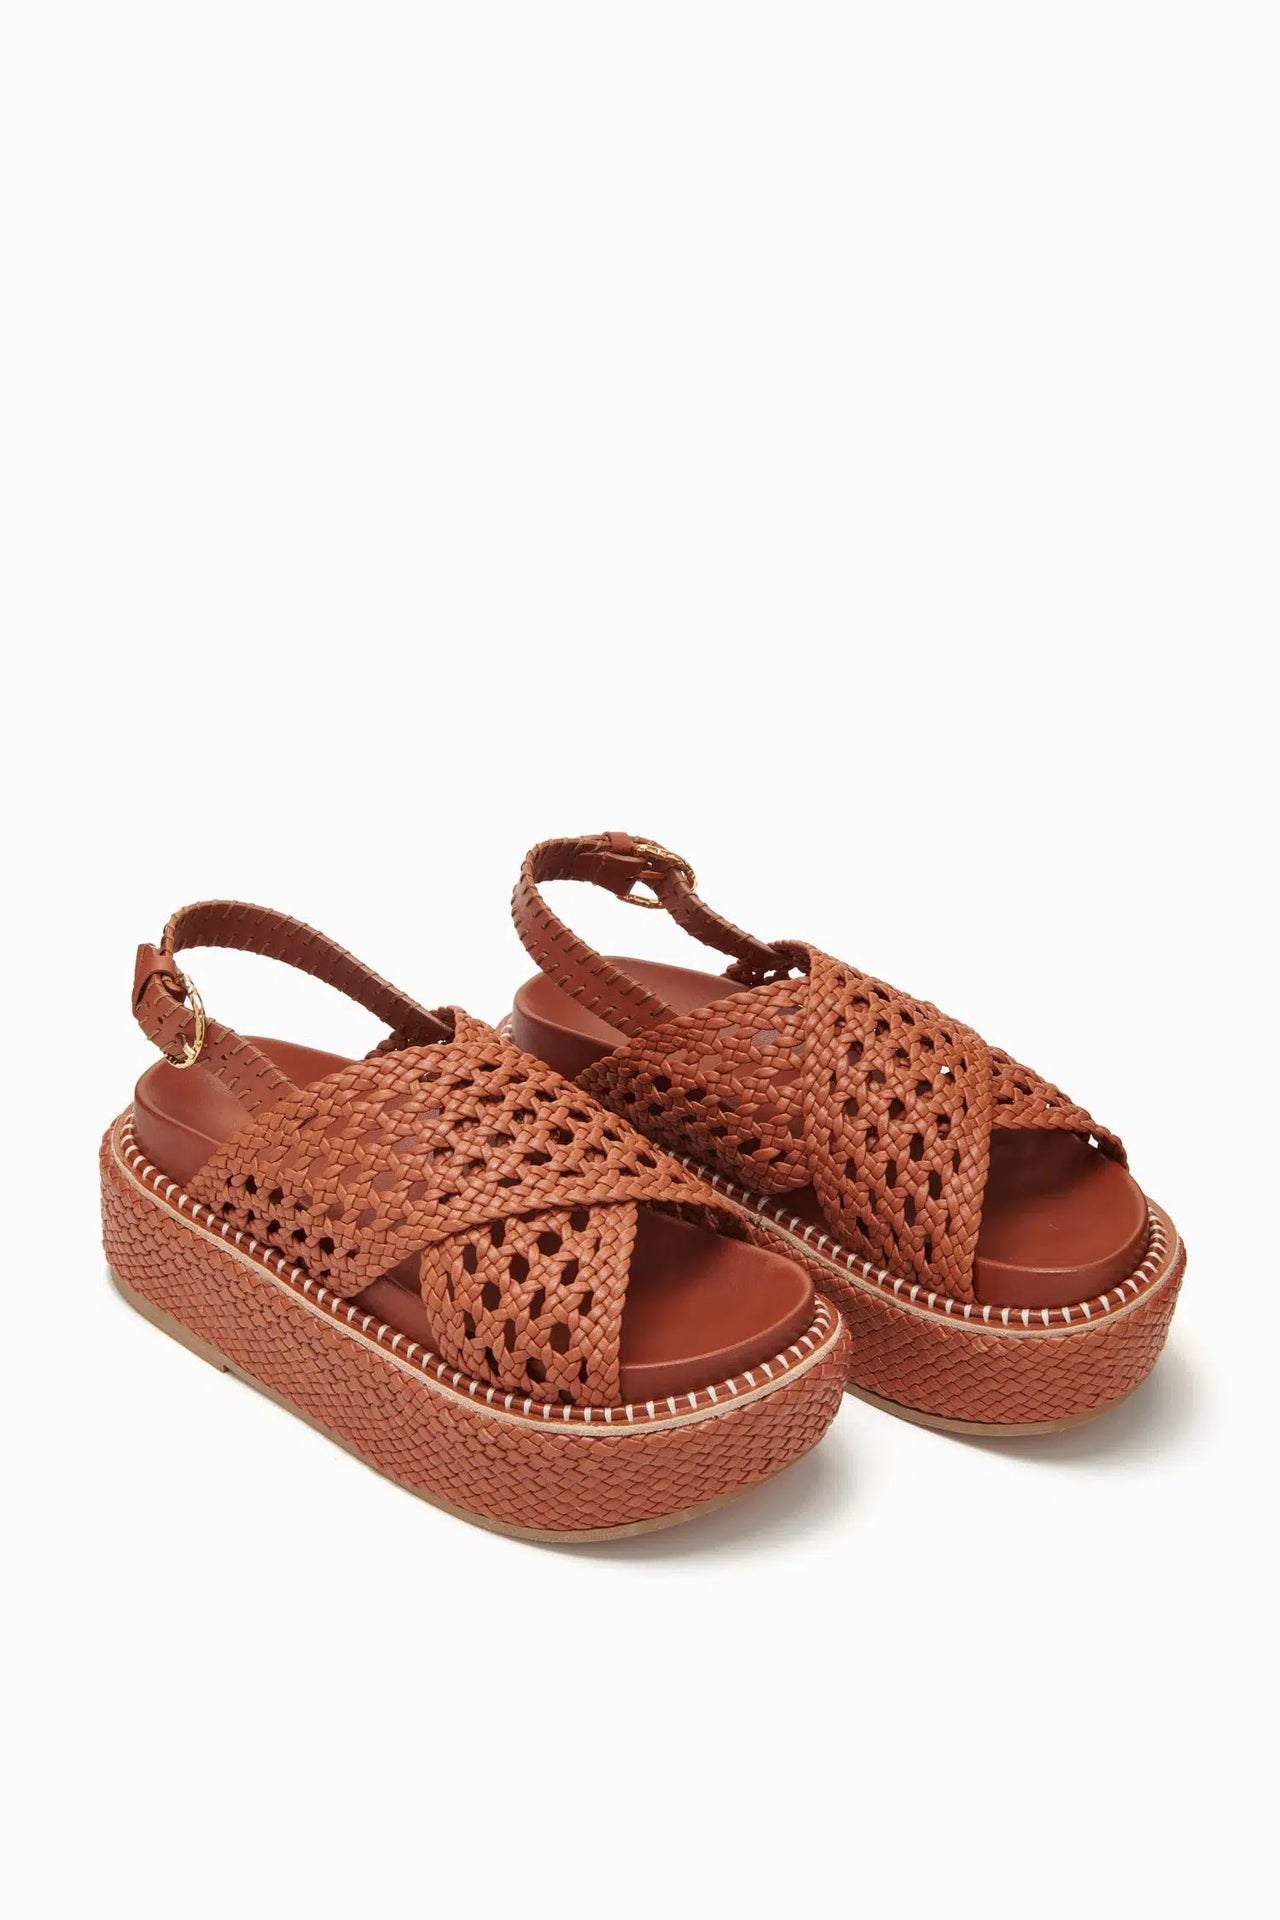 Gili Woven Leather Sandal-Shoes & Sandals-Ulla Johnson-Debs Boutique